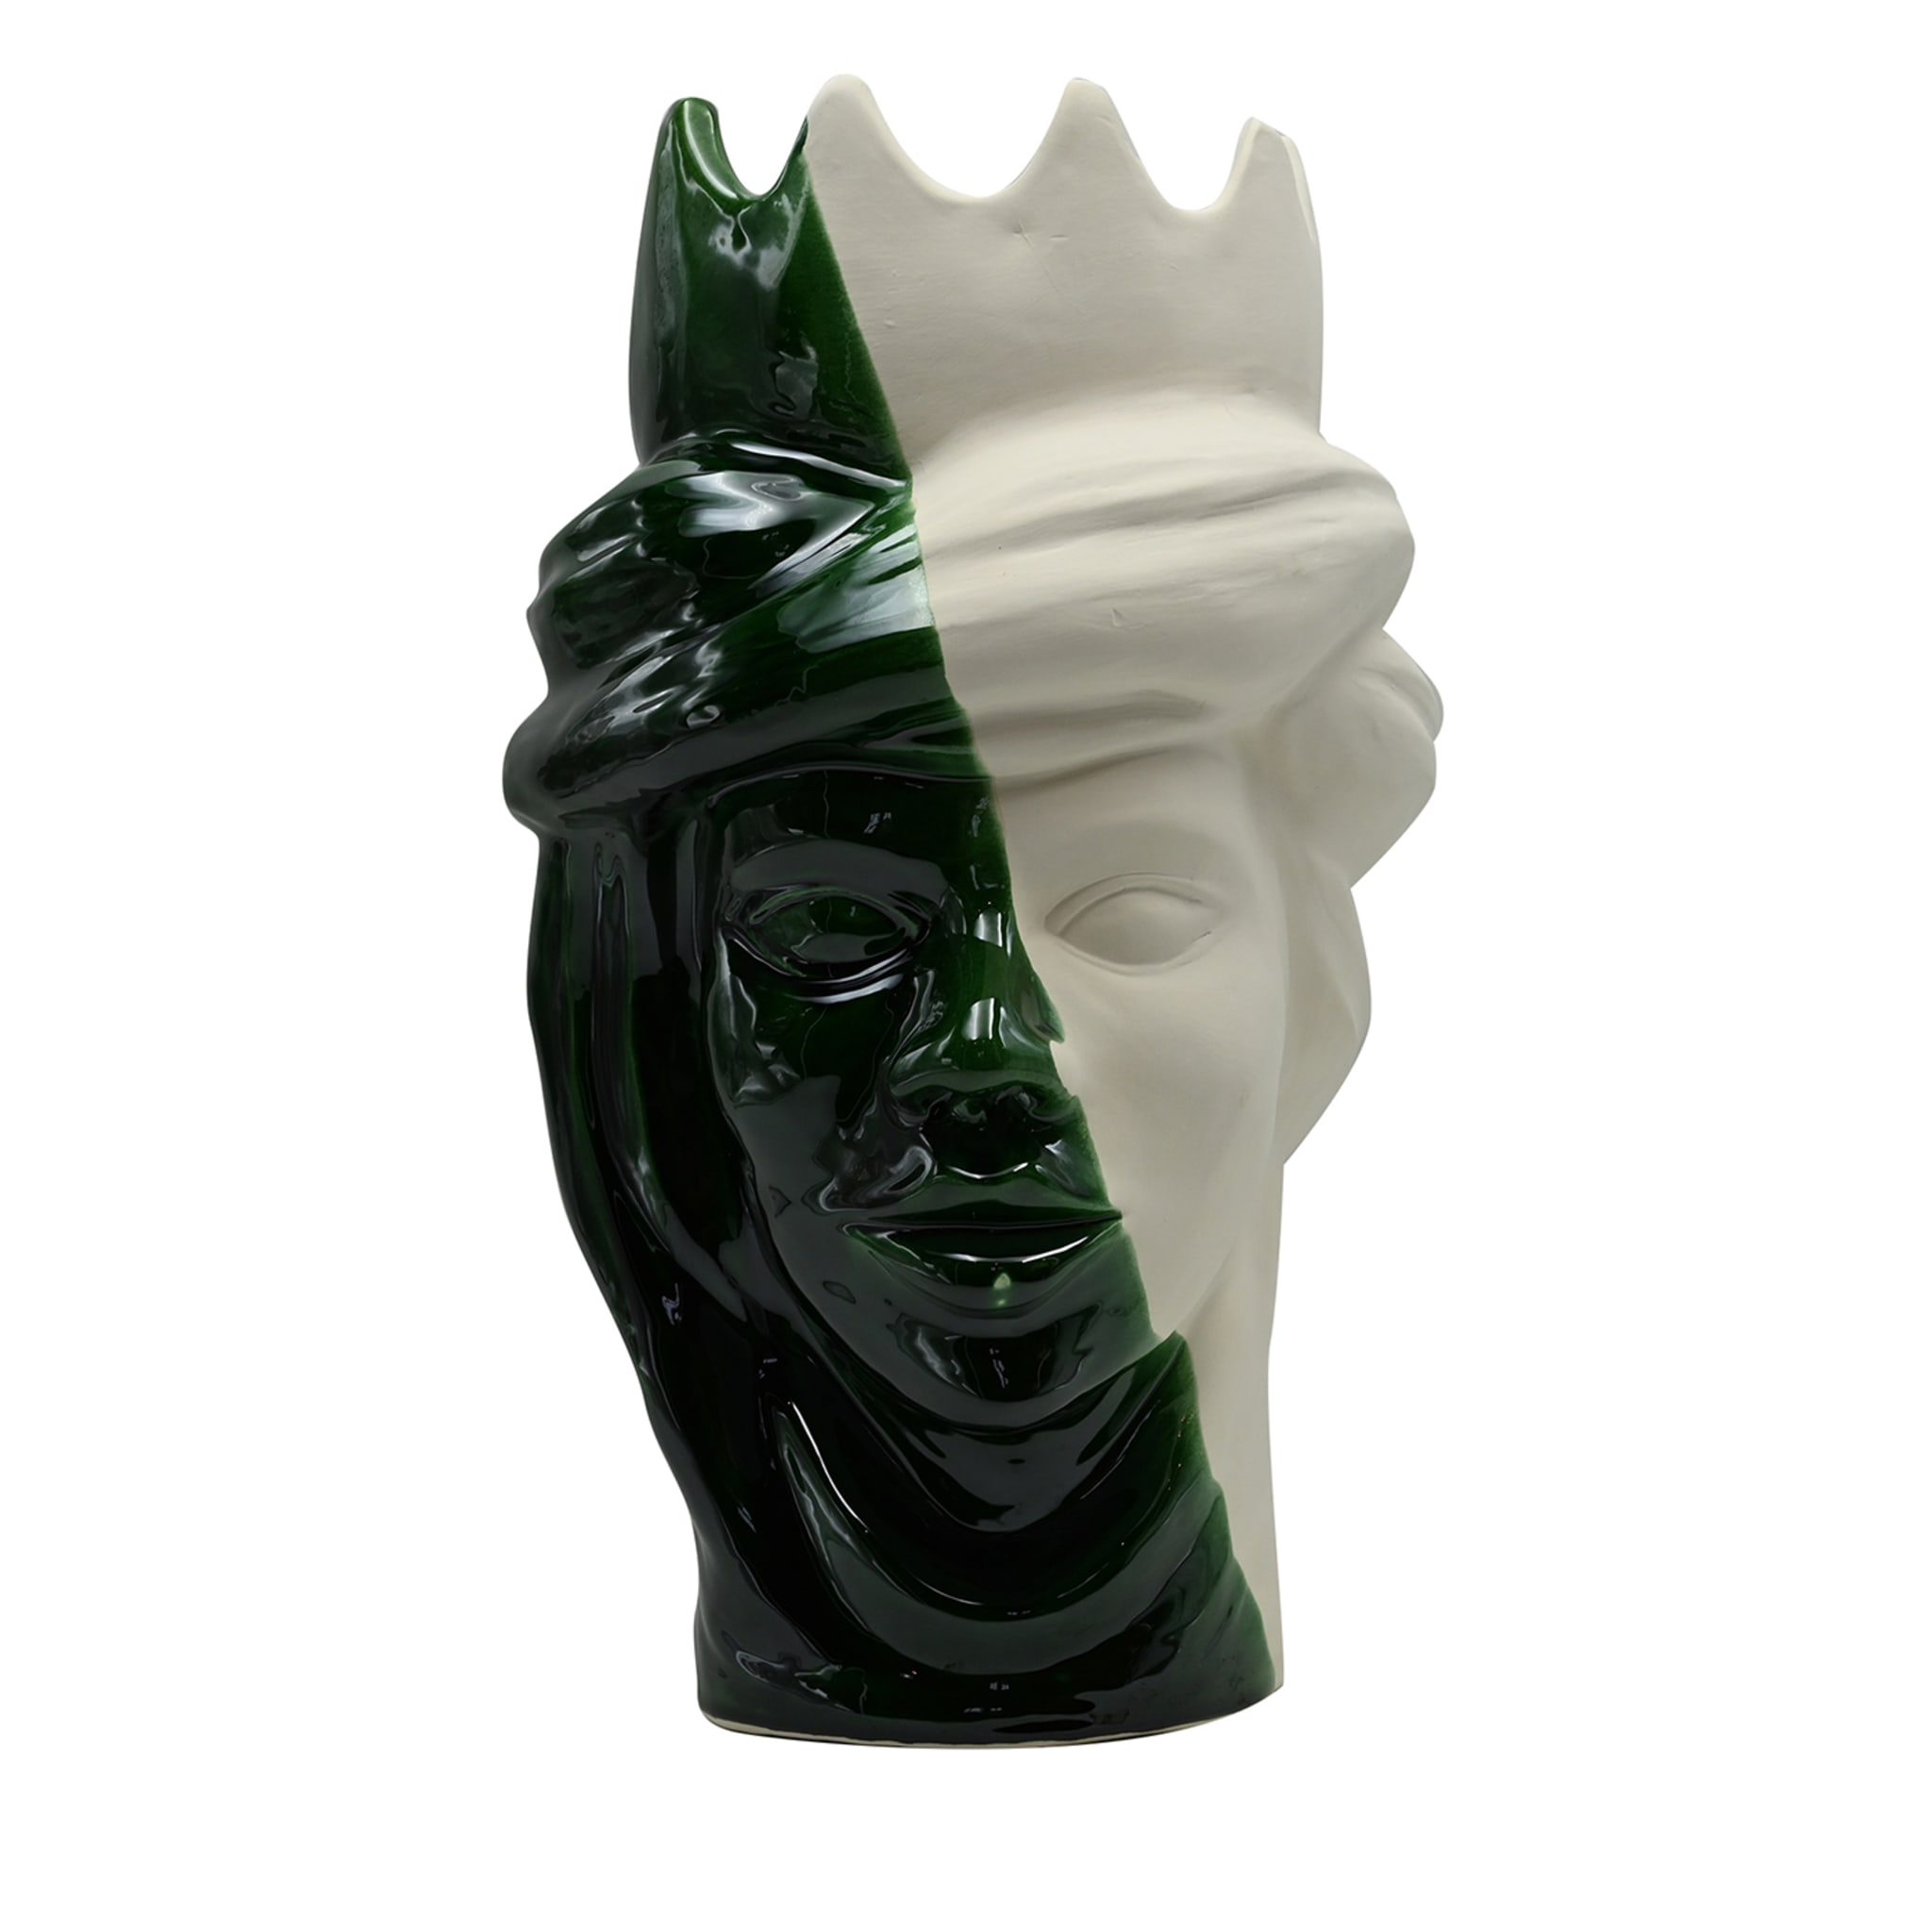 Italian Green & White Moor's Sculpture